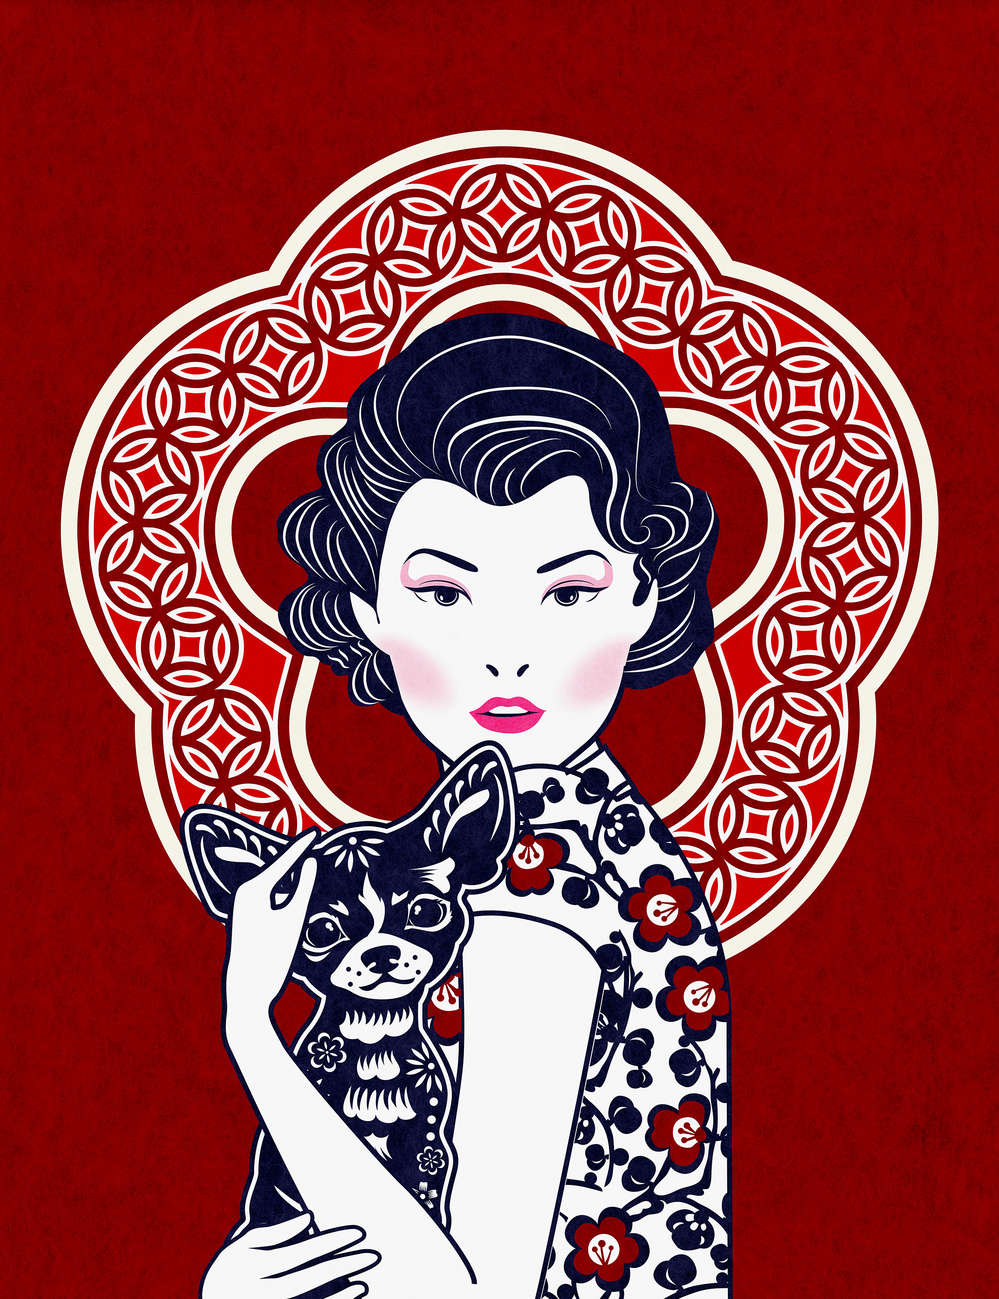             Photo wallpaper Woman with dog, Asian motif - Premium smooth fleece
        